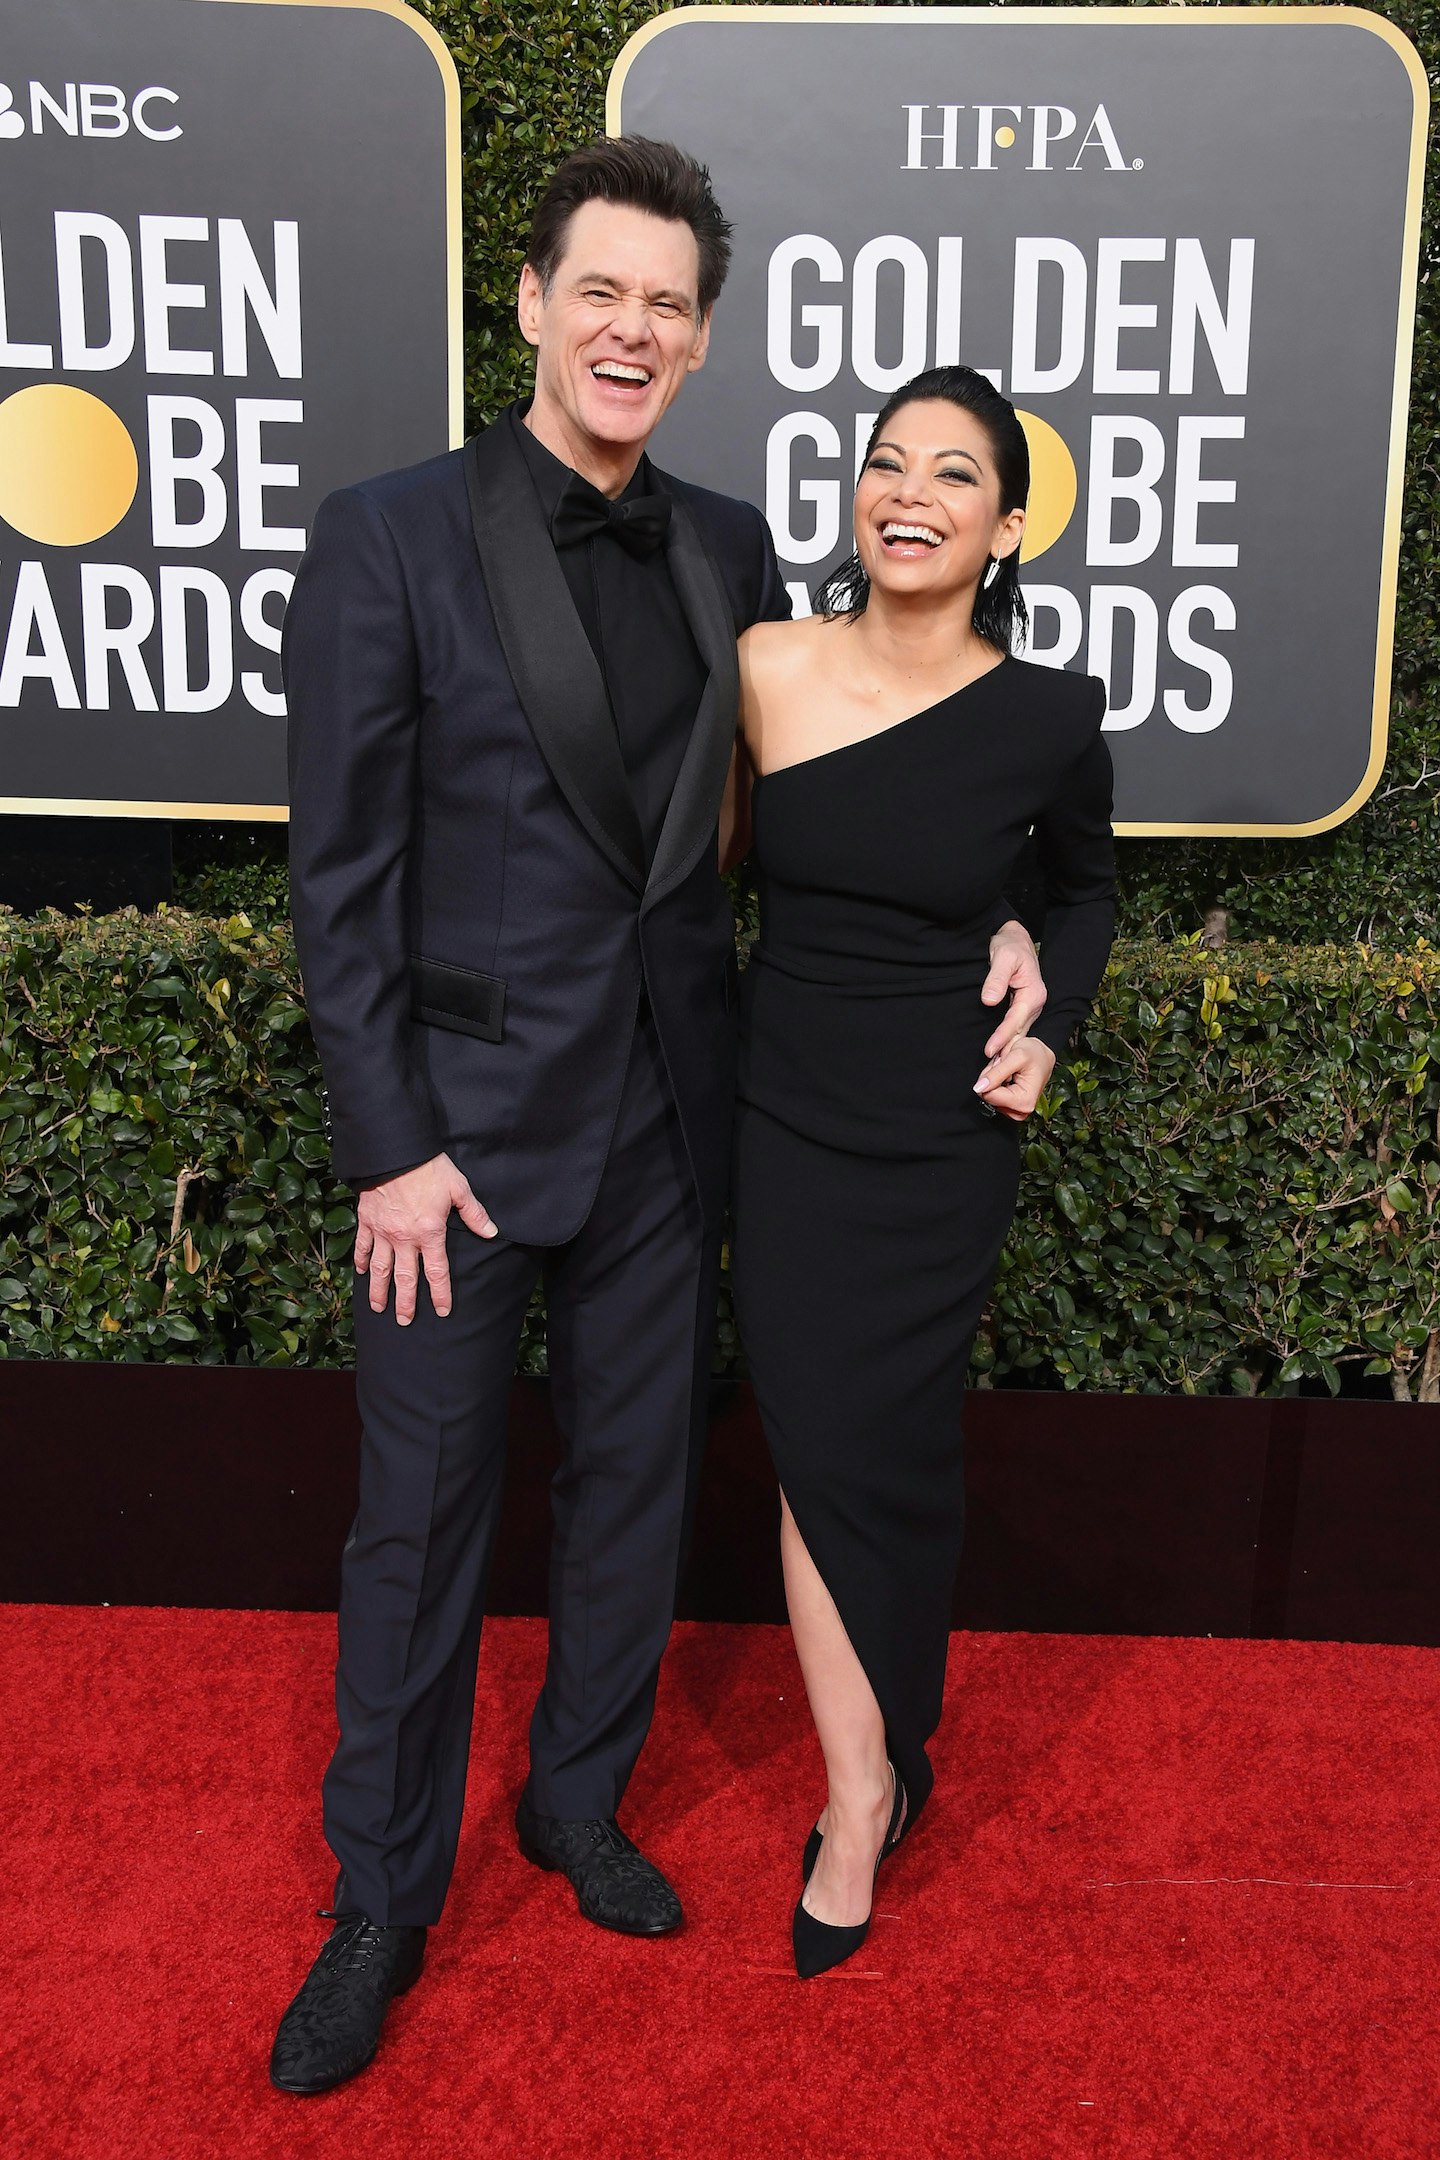 Jim Carrey and Ginger Gonzaga at the Golden Globes 2019